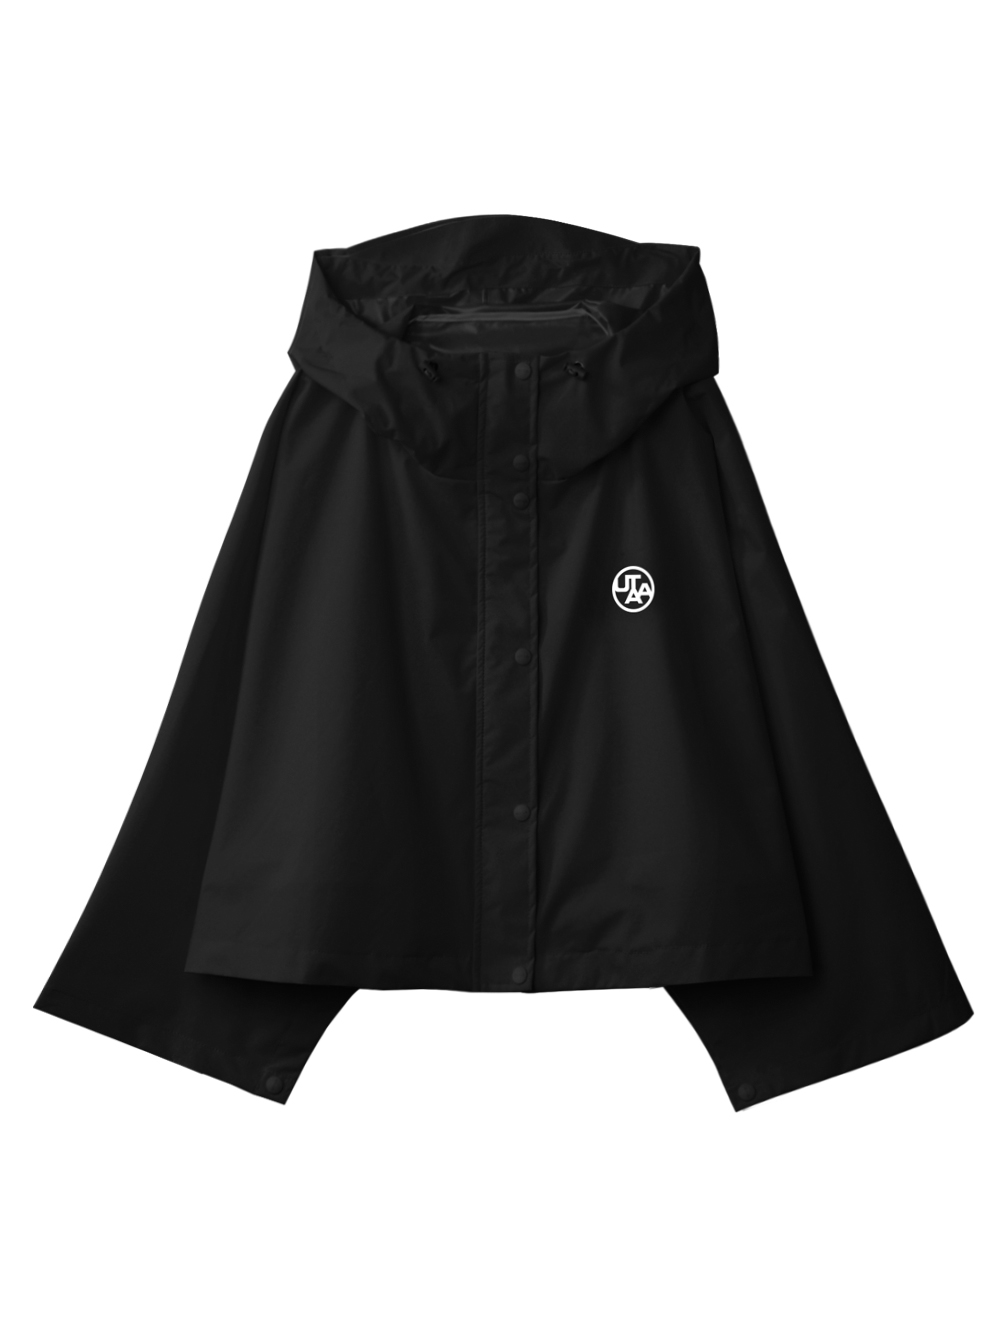 UTAA Scudo Ring Panther Poncho Raincoat : Women's Black (UD0RWF774BK